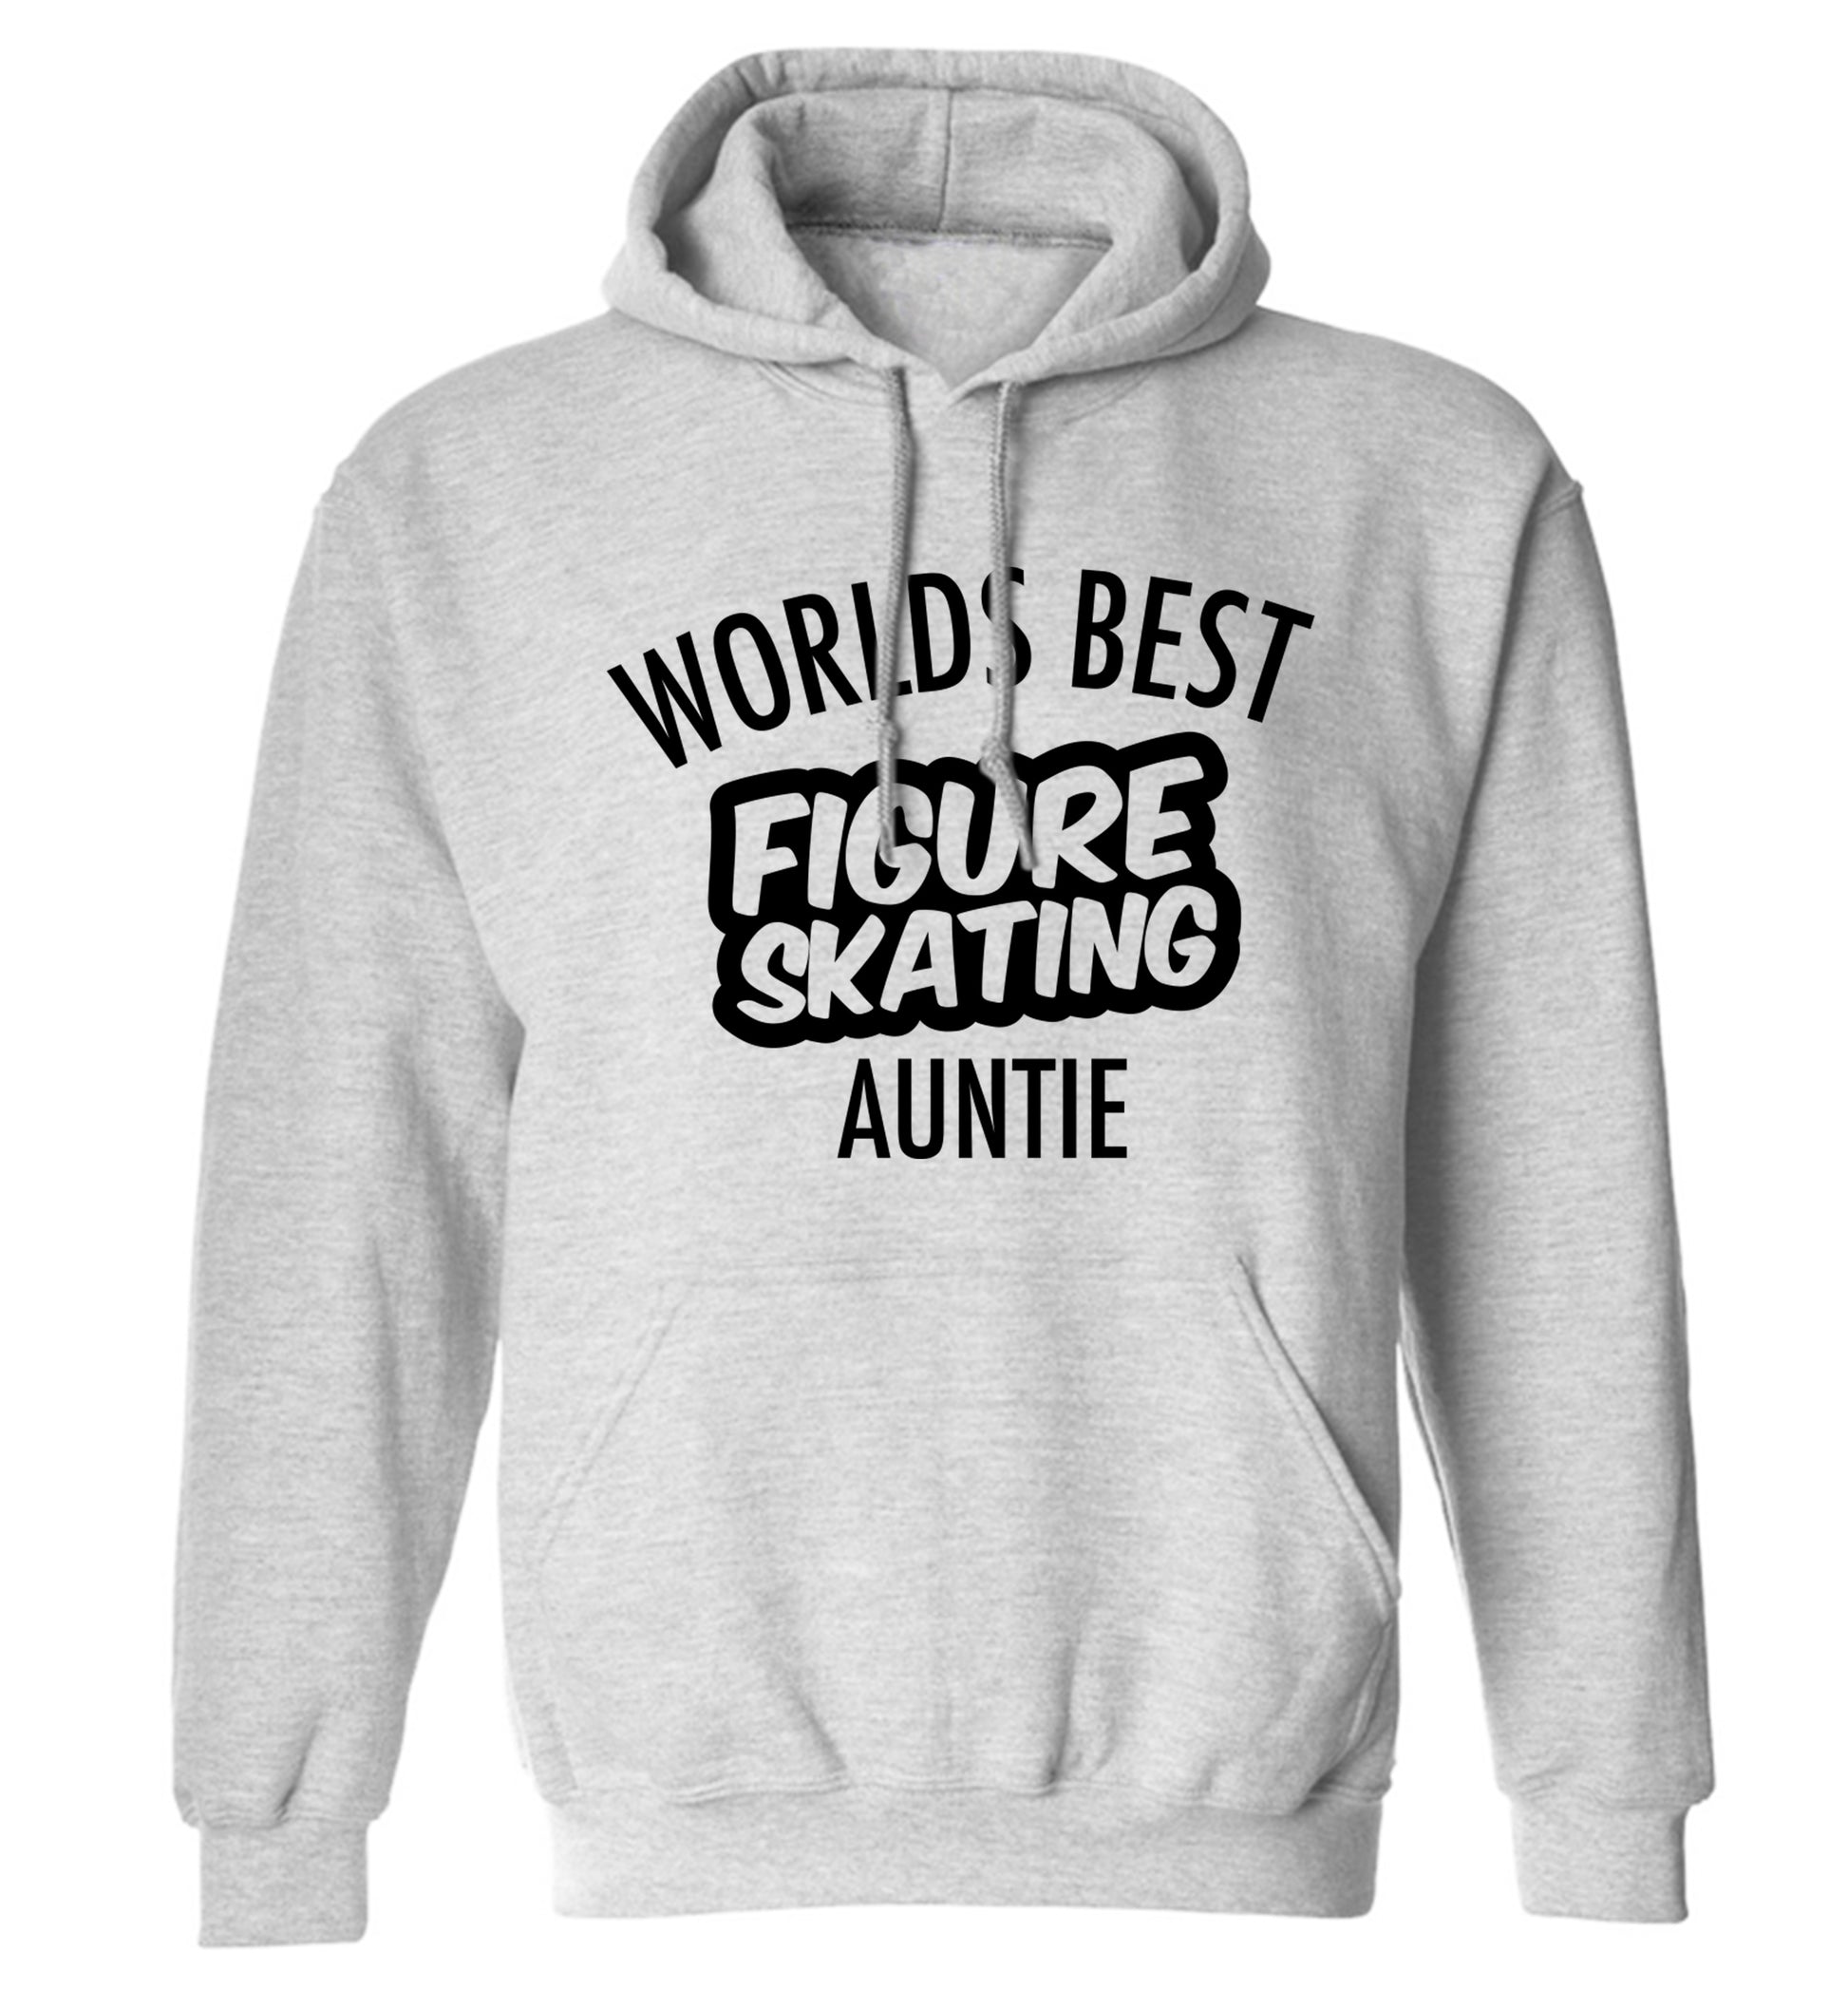 Worlds best figure skating auntie adults unisexgrey hoodie 2XL